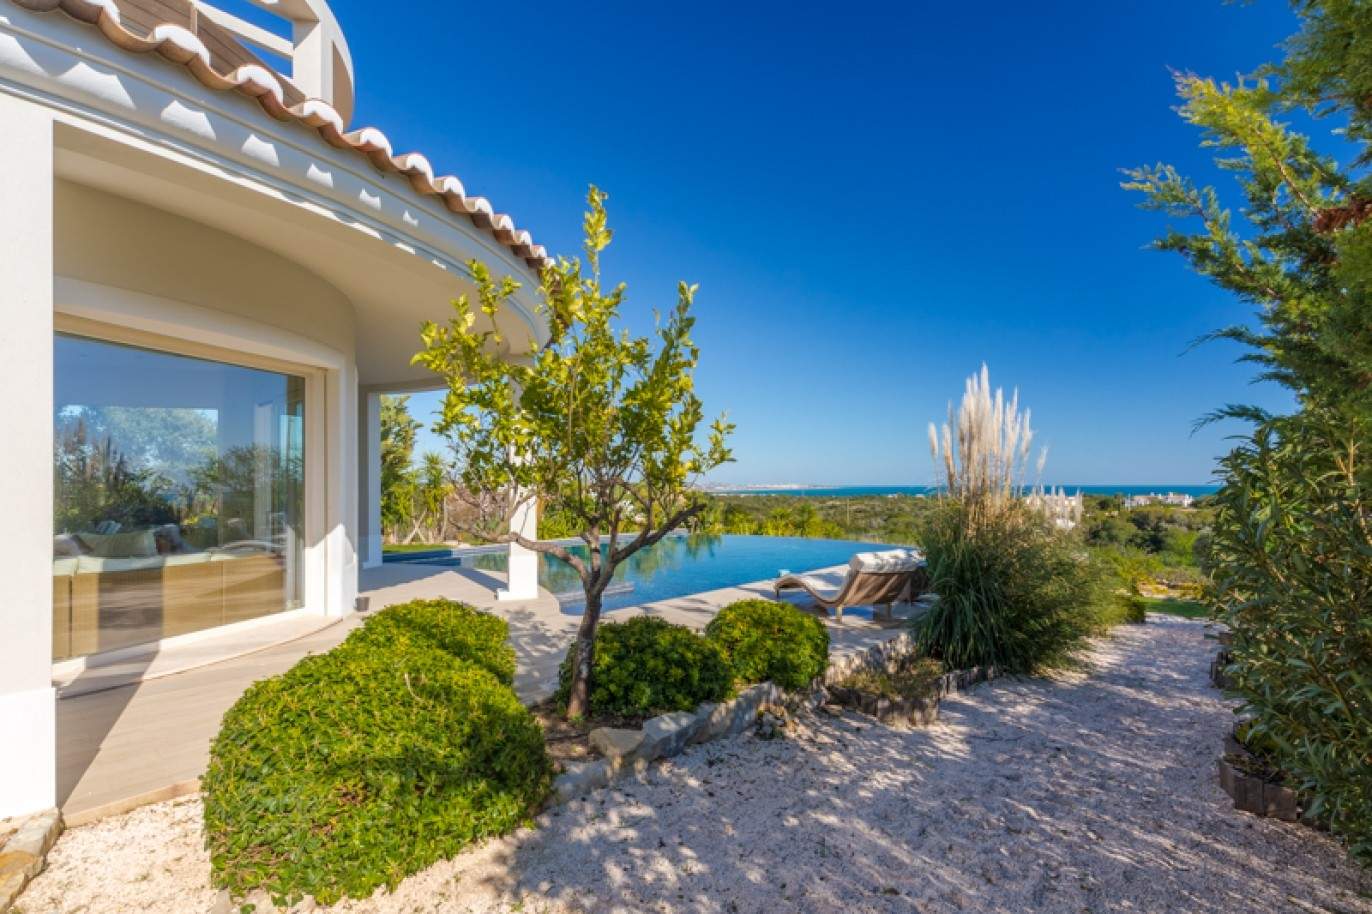 Villa for sale, with sea view, near beach and golf, Algarve, Portugal_76404